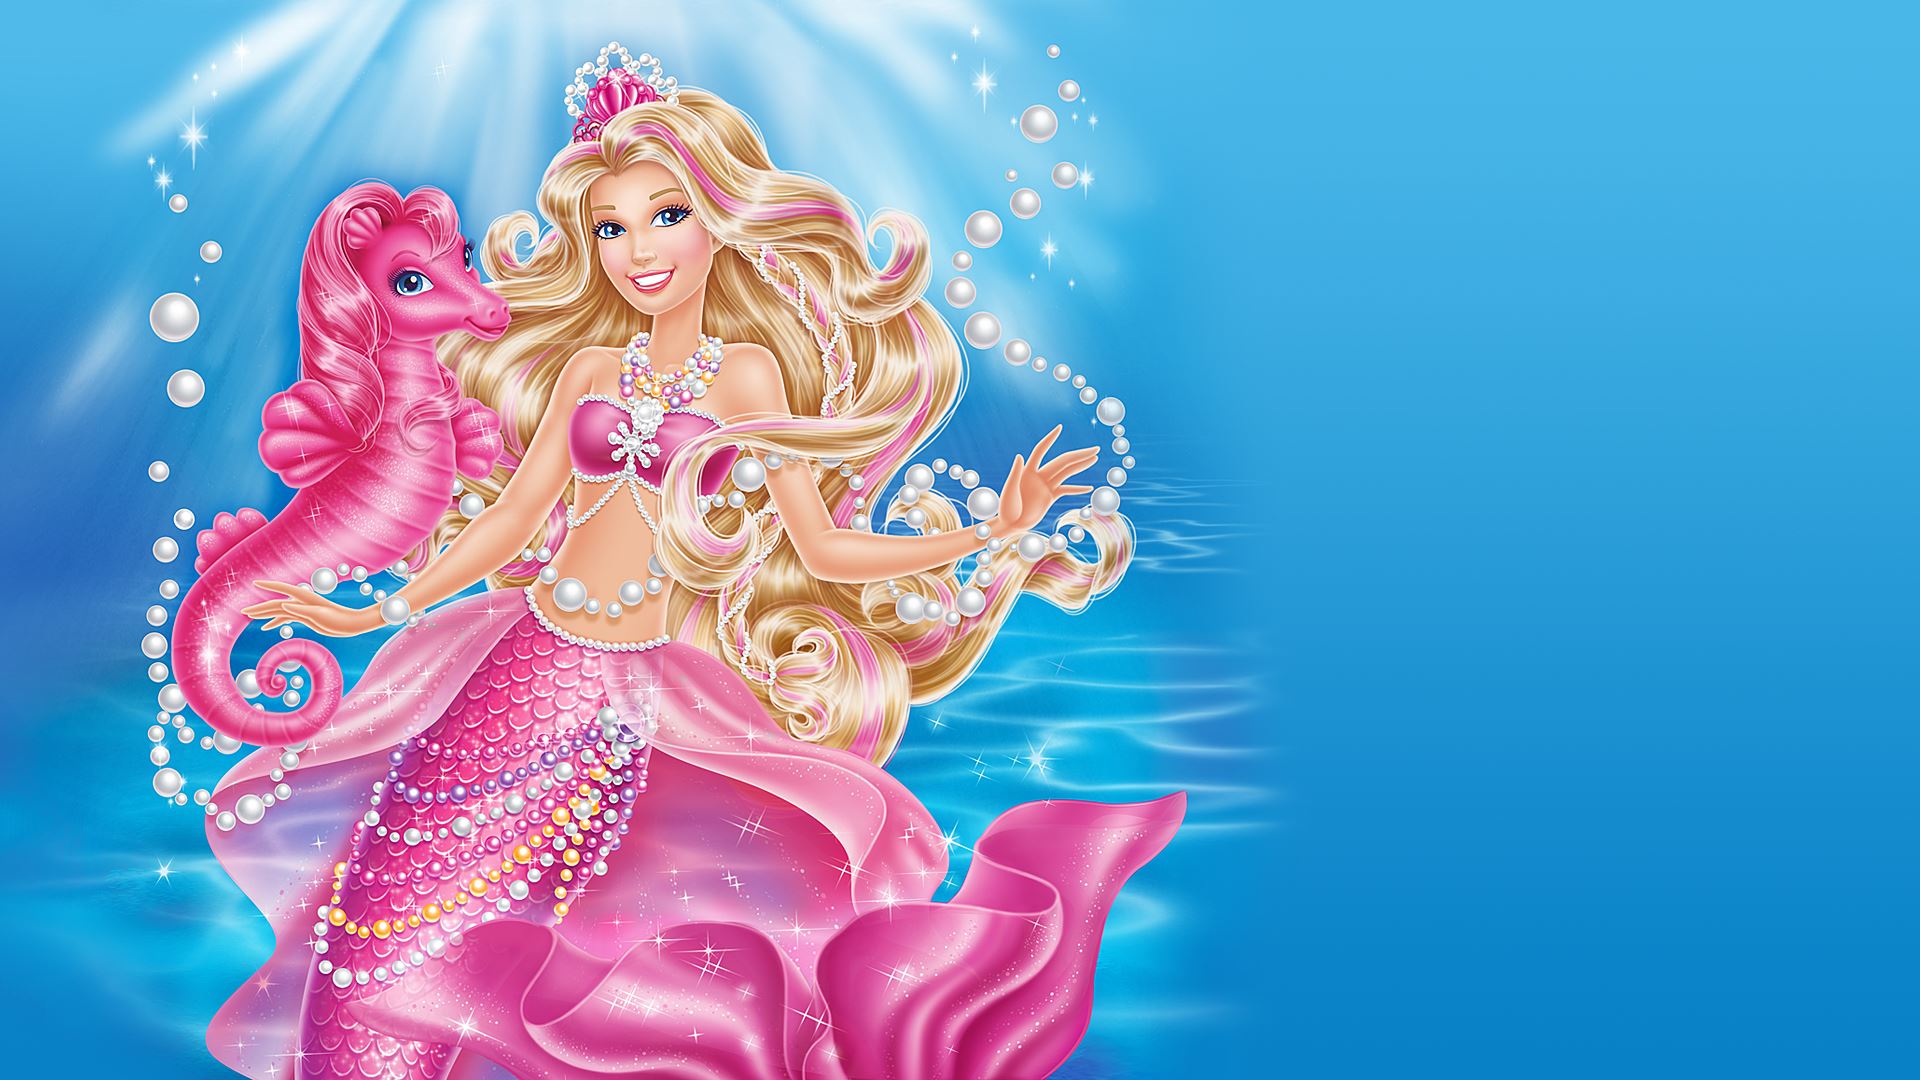 Barbie The Pearl Princess Wallpaper - Barbie's Animated Films Wallpaper  (43646117) - Fanpop